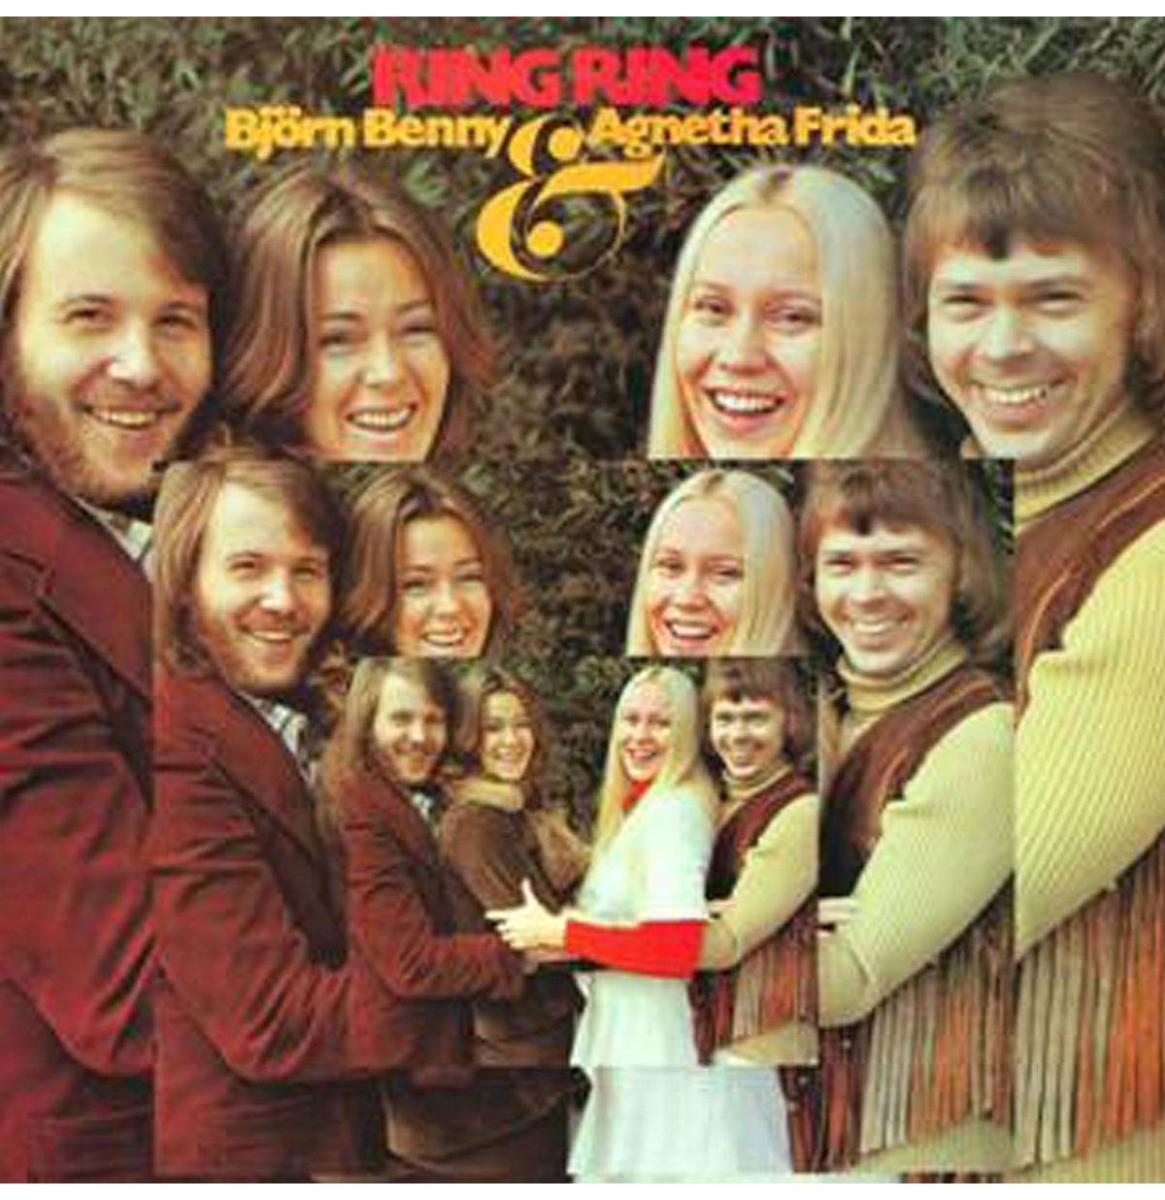 Abba (Björn Benny & Agnetha Frida) - Ring Ring LP